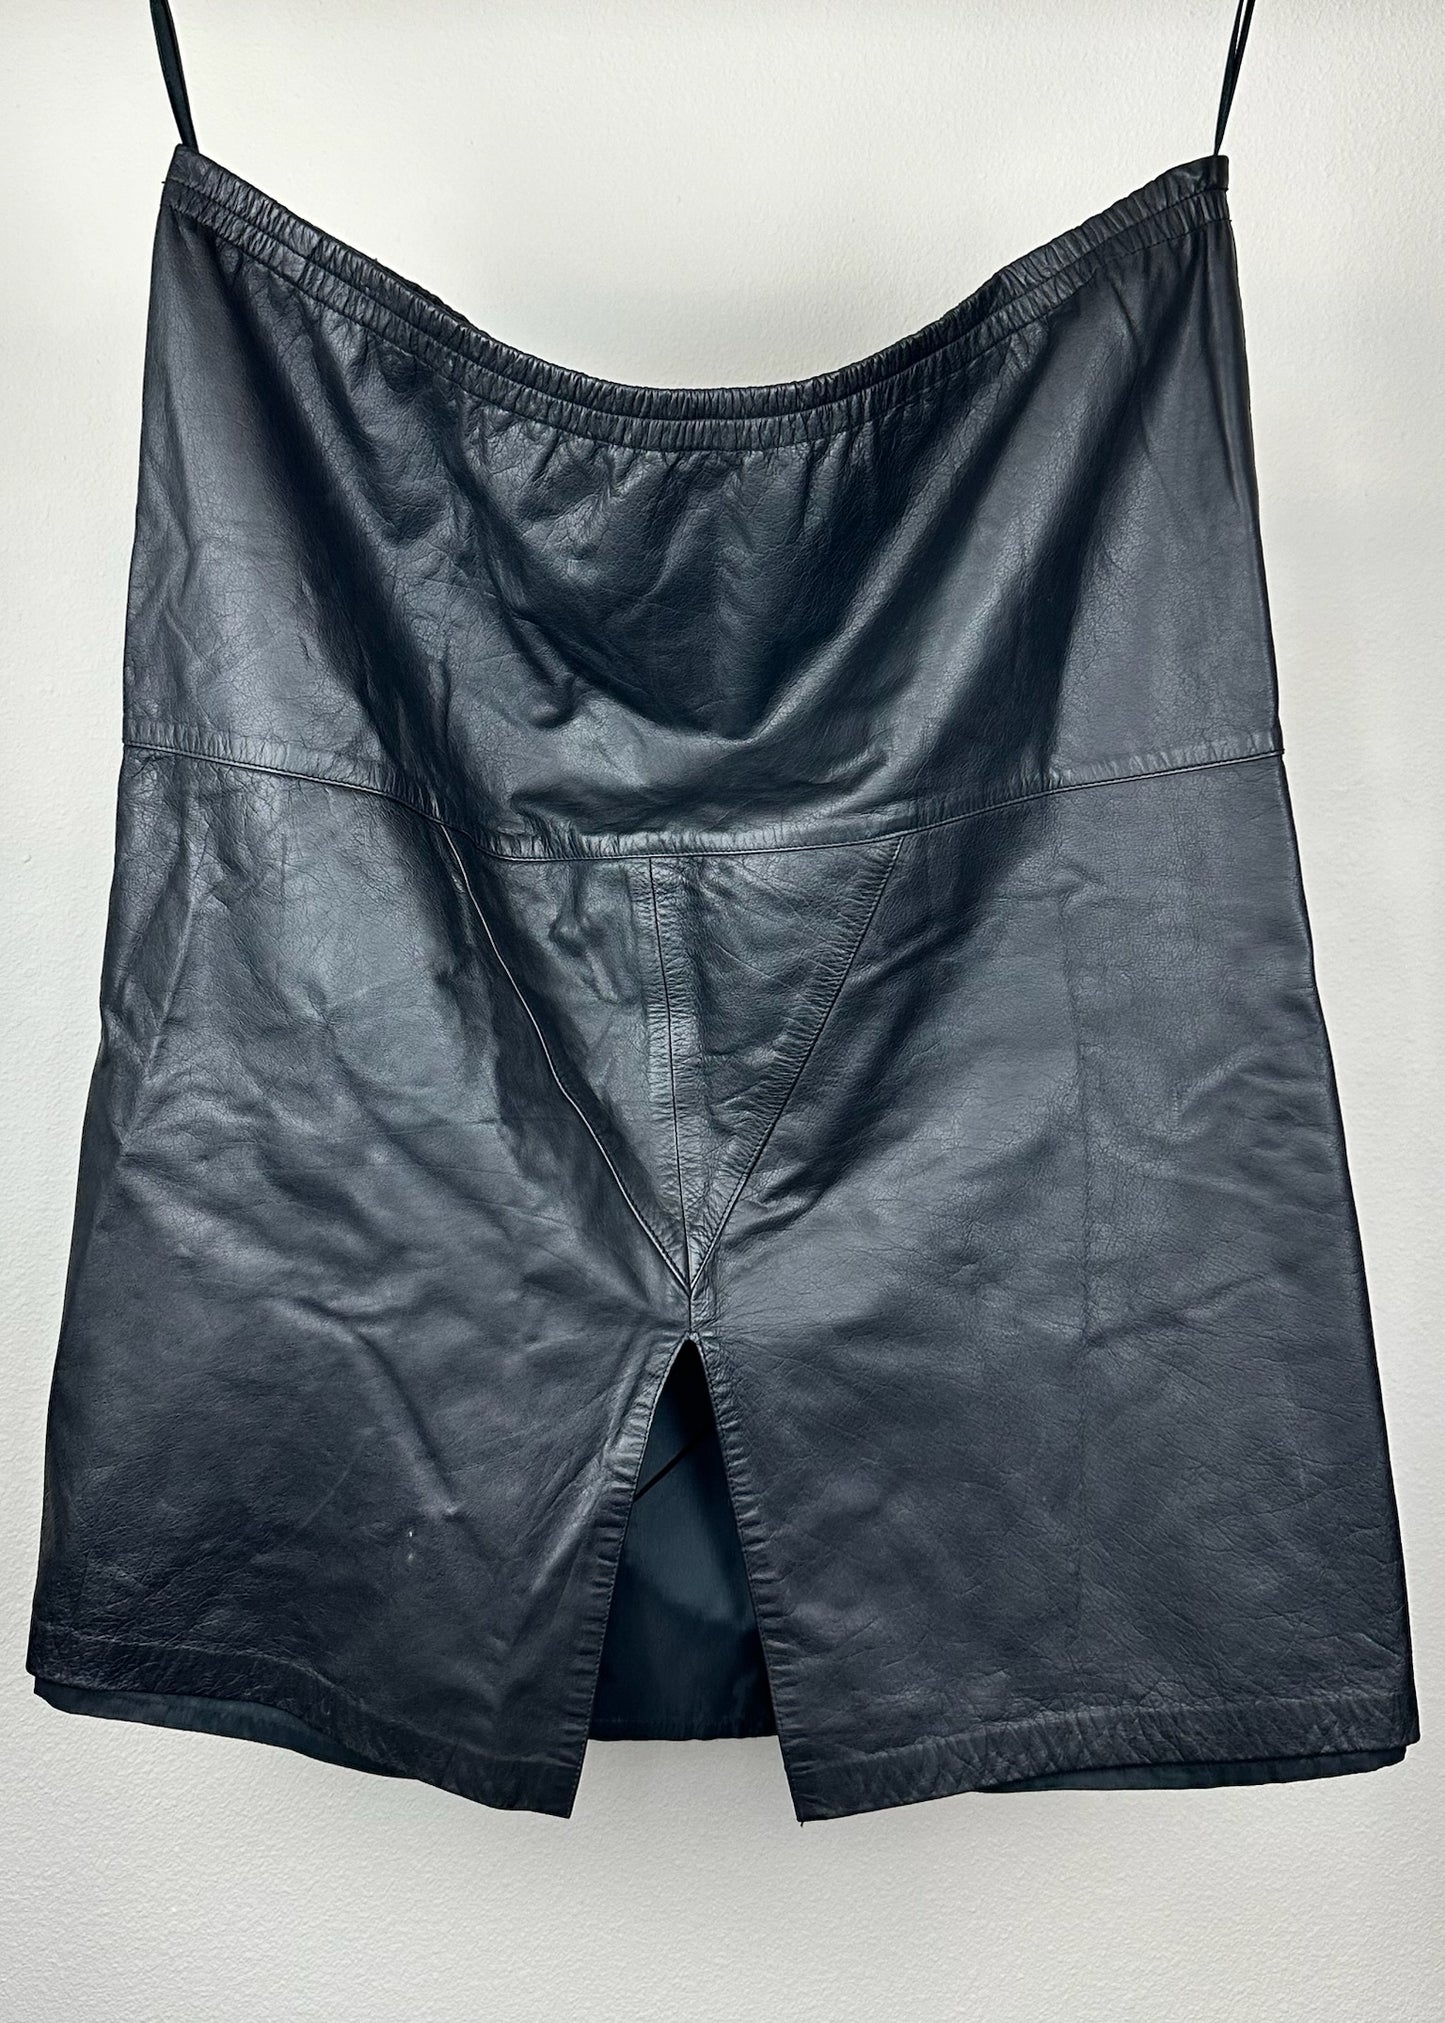 Vintage Leather Skirt by Bonnie Boerer